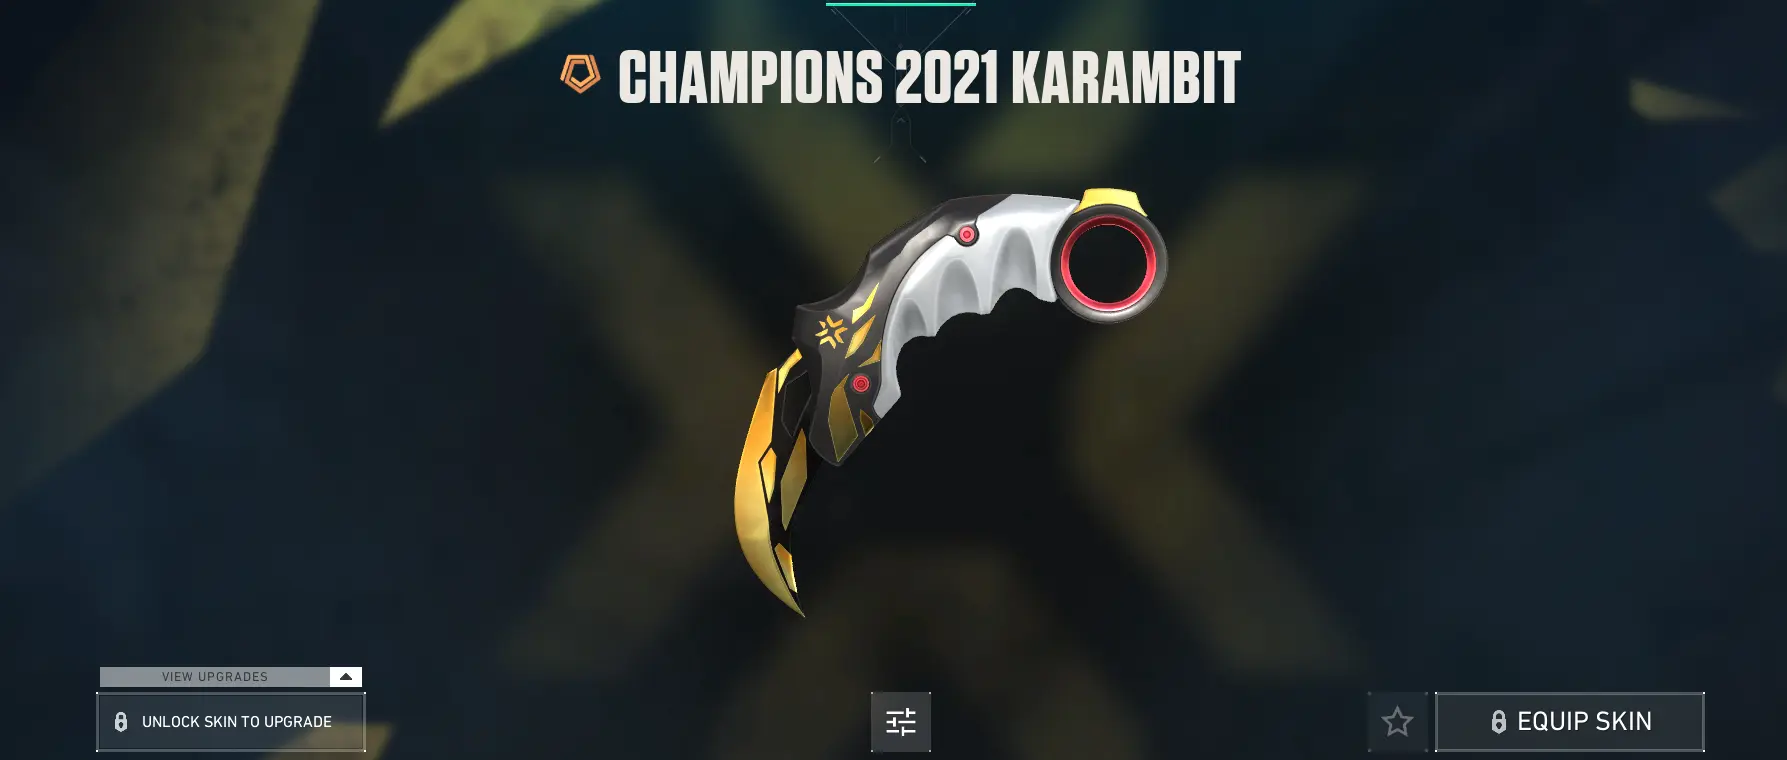 Champions 2021 Karambit